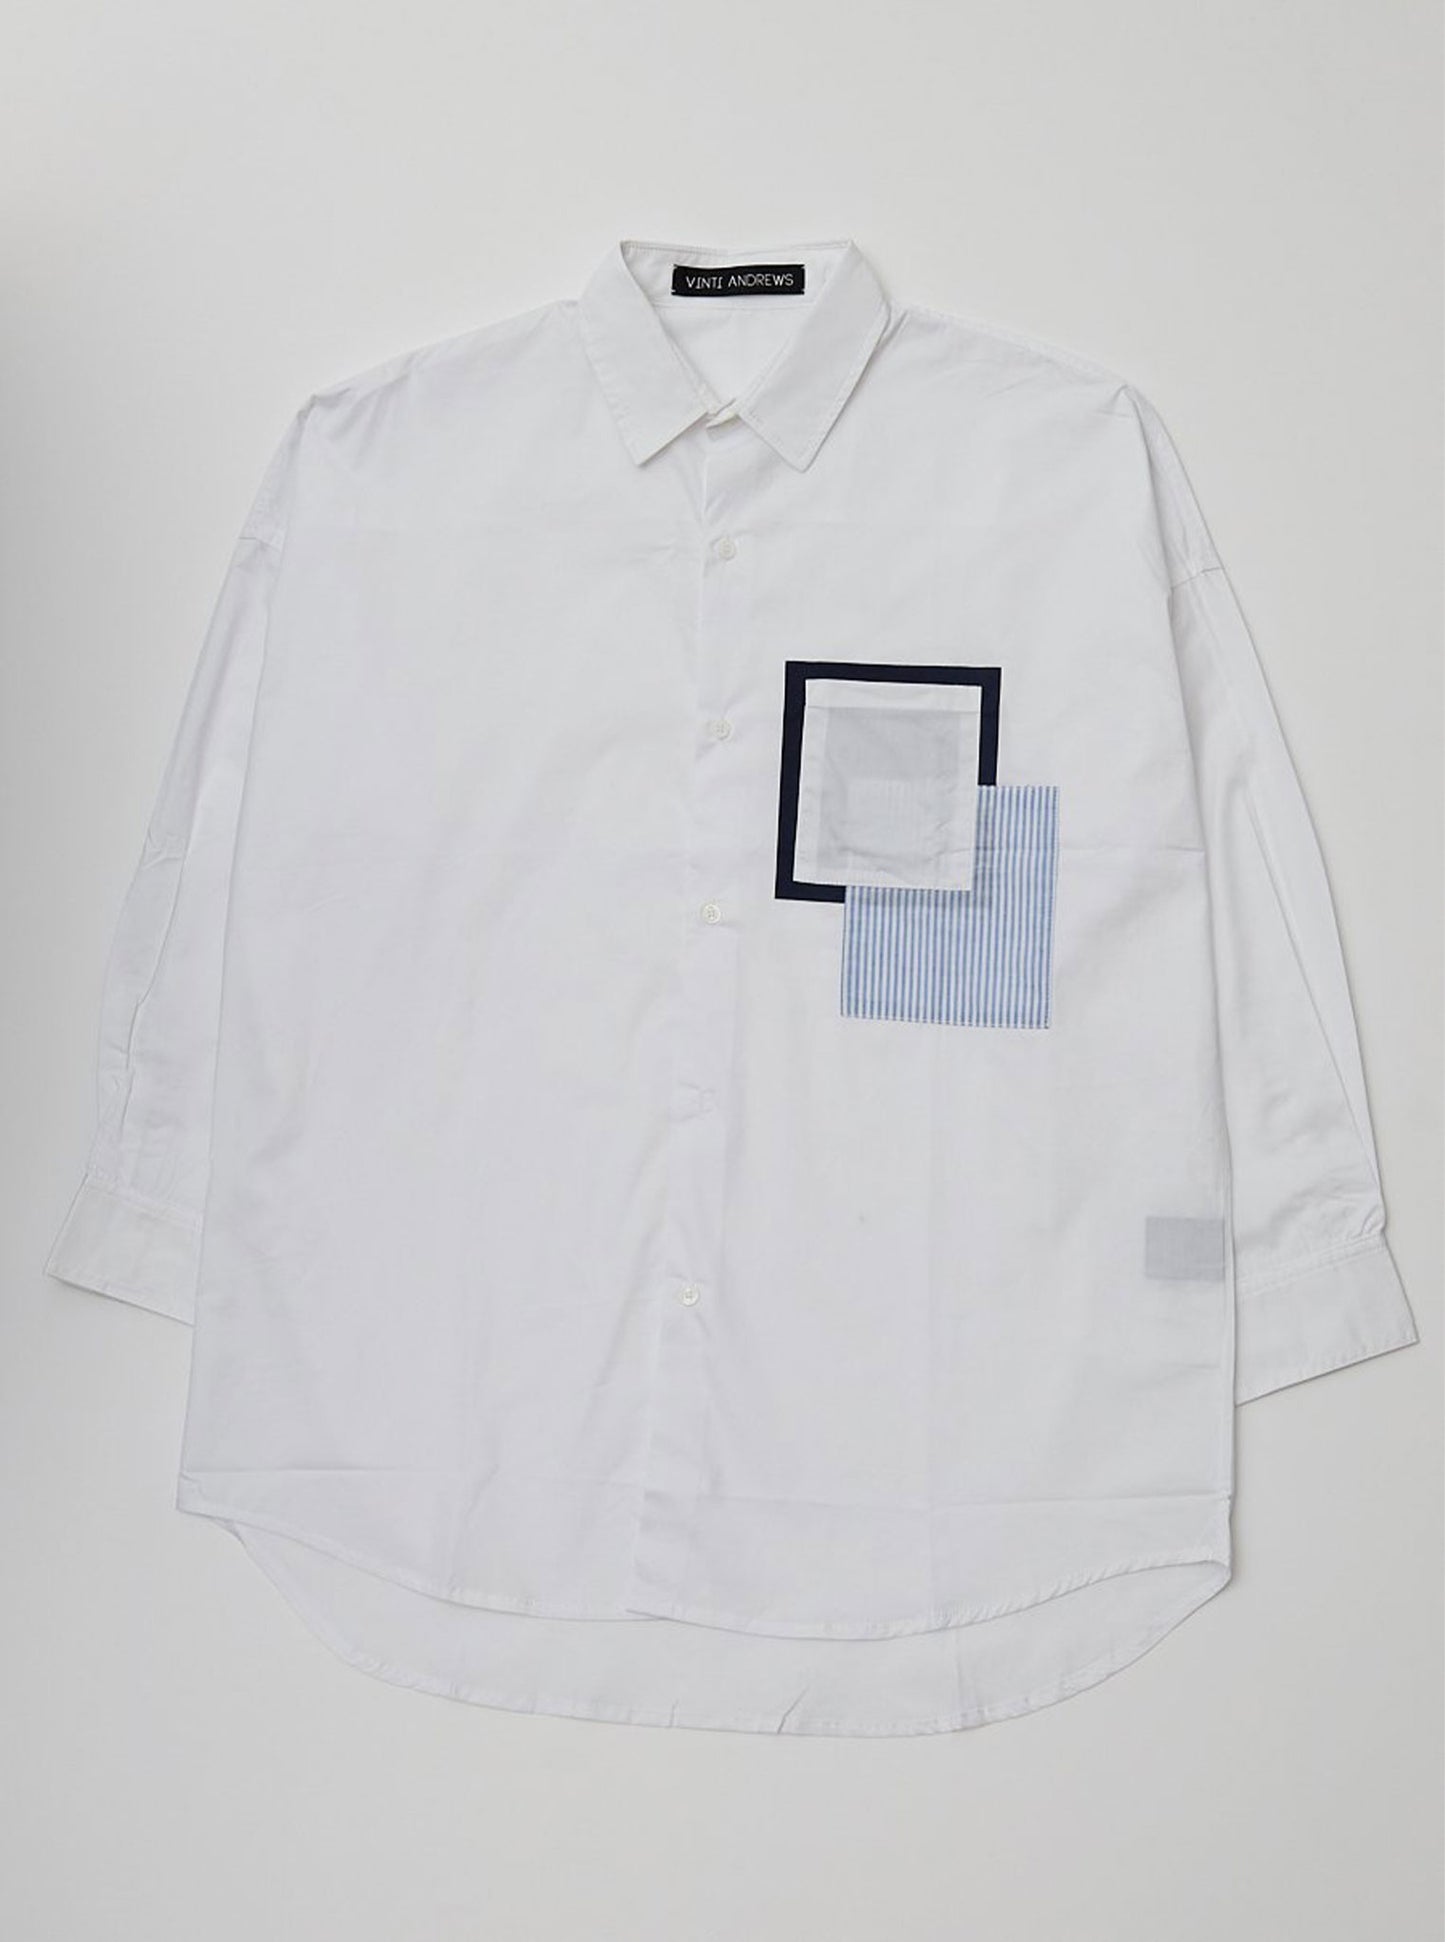 Vinti Andrews Pocket Shirt White